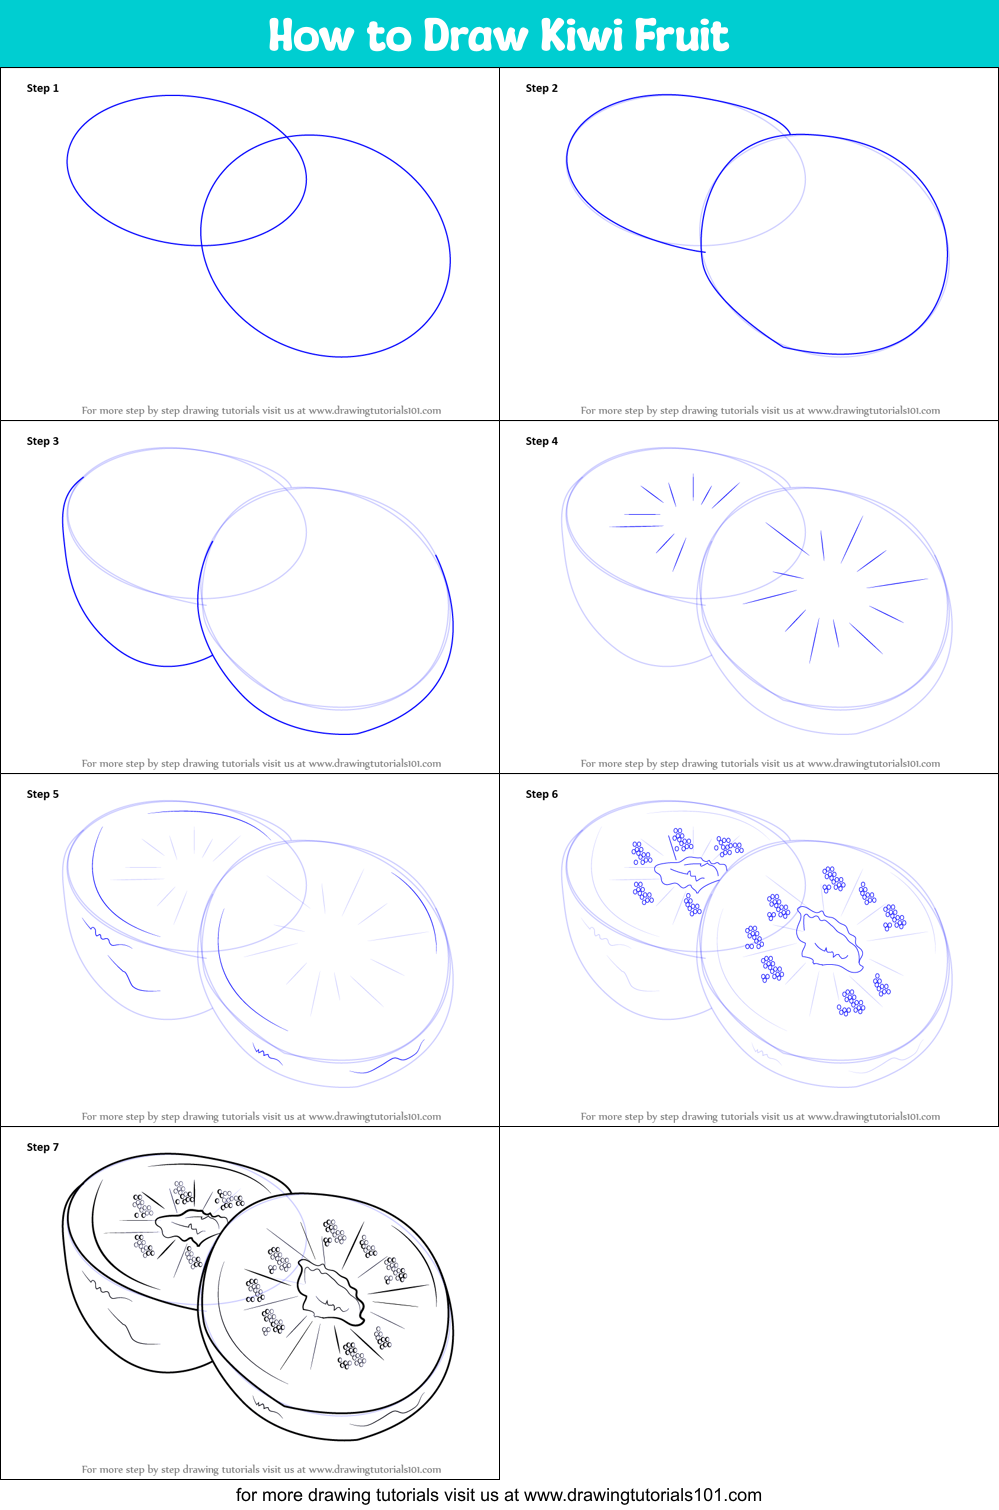 How to Draw Kiwi Fruit (Fruits) Step by Step